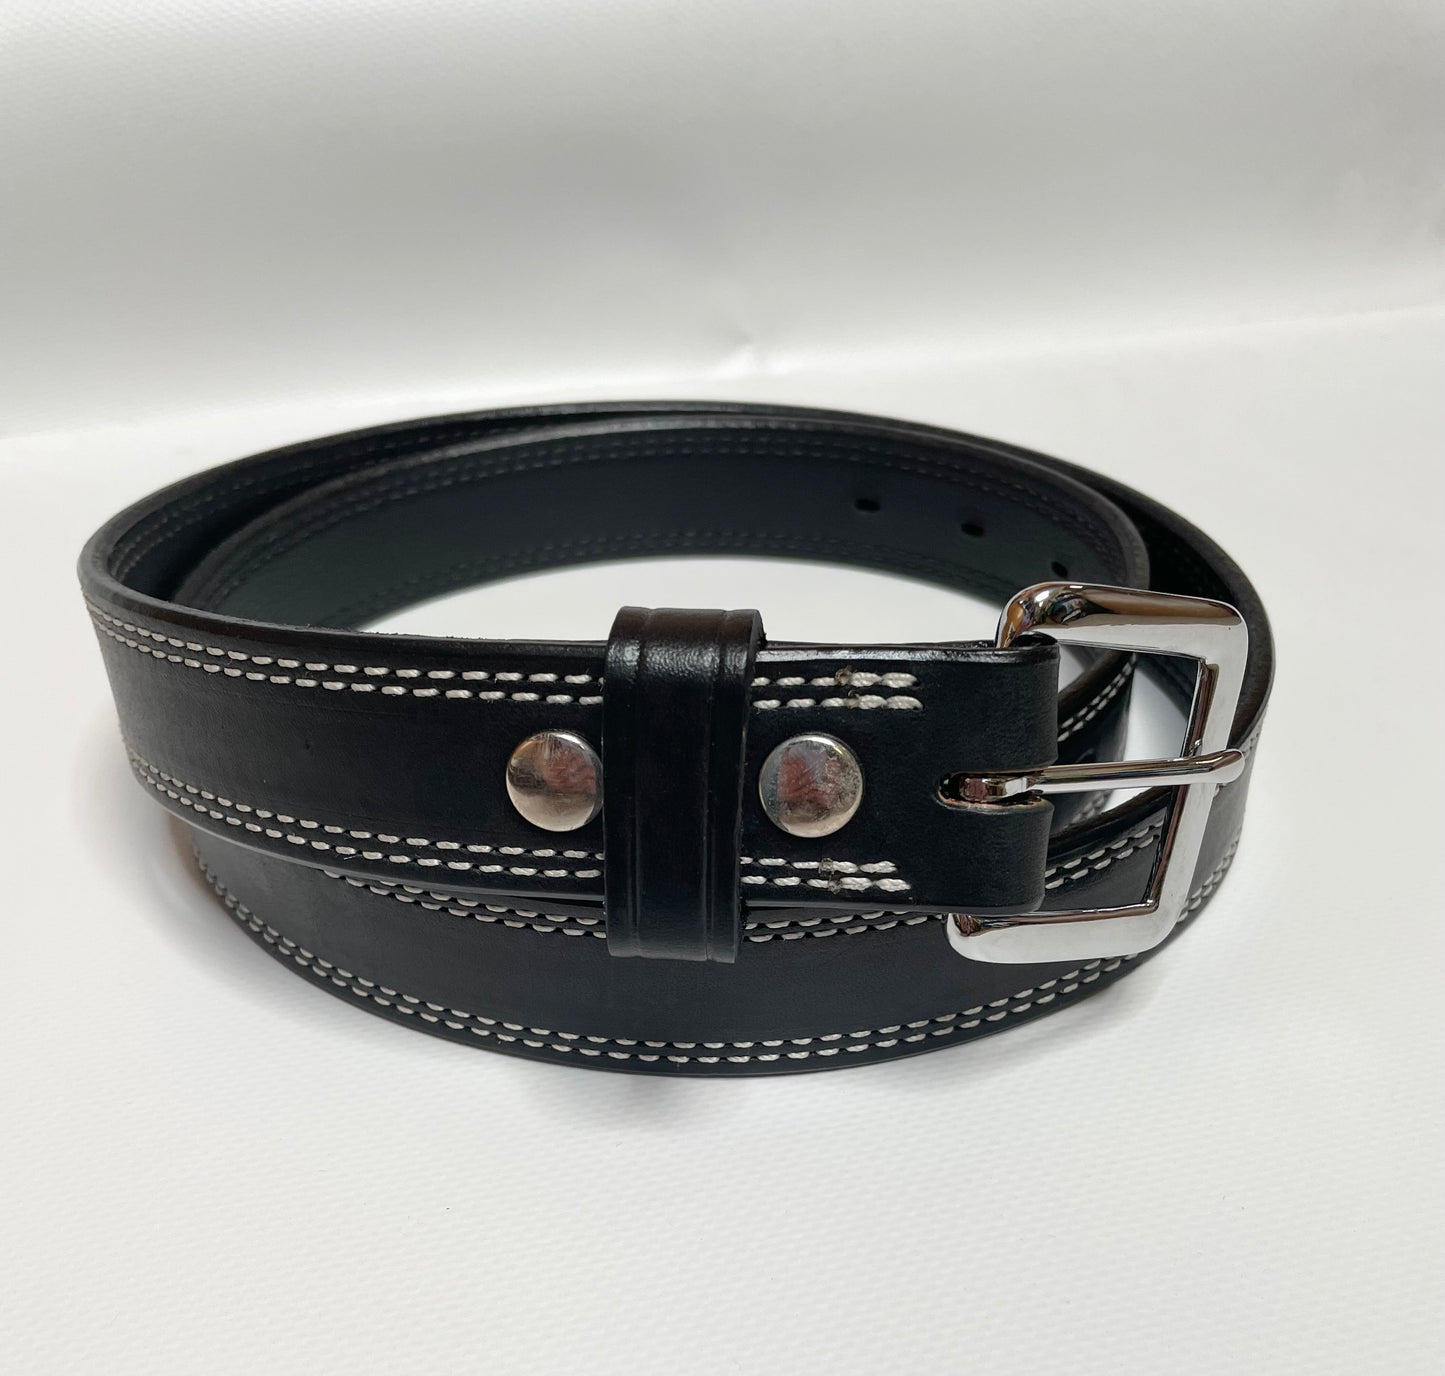 English leather double stitched belt